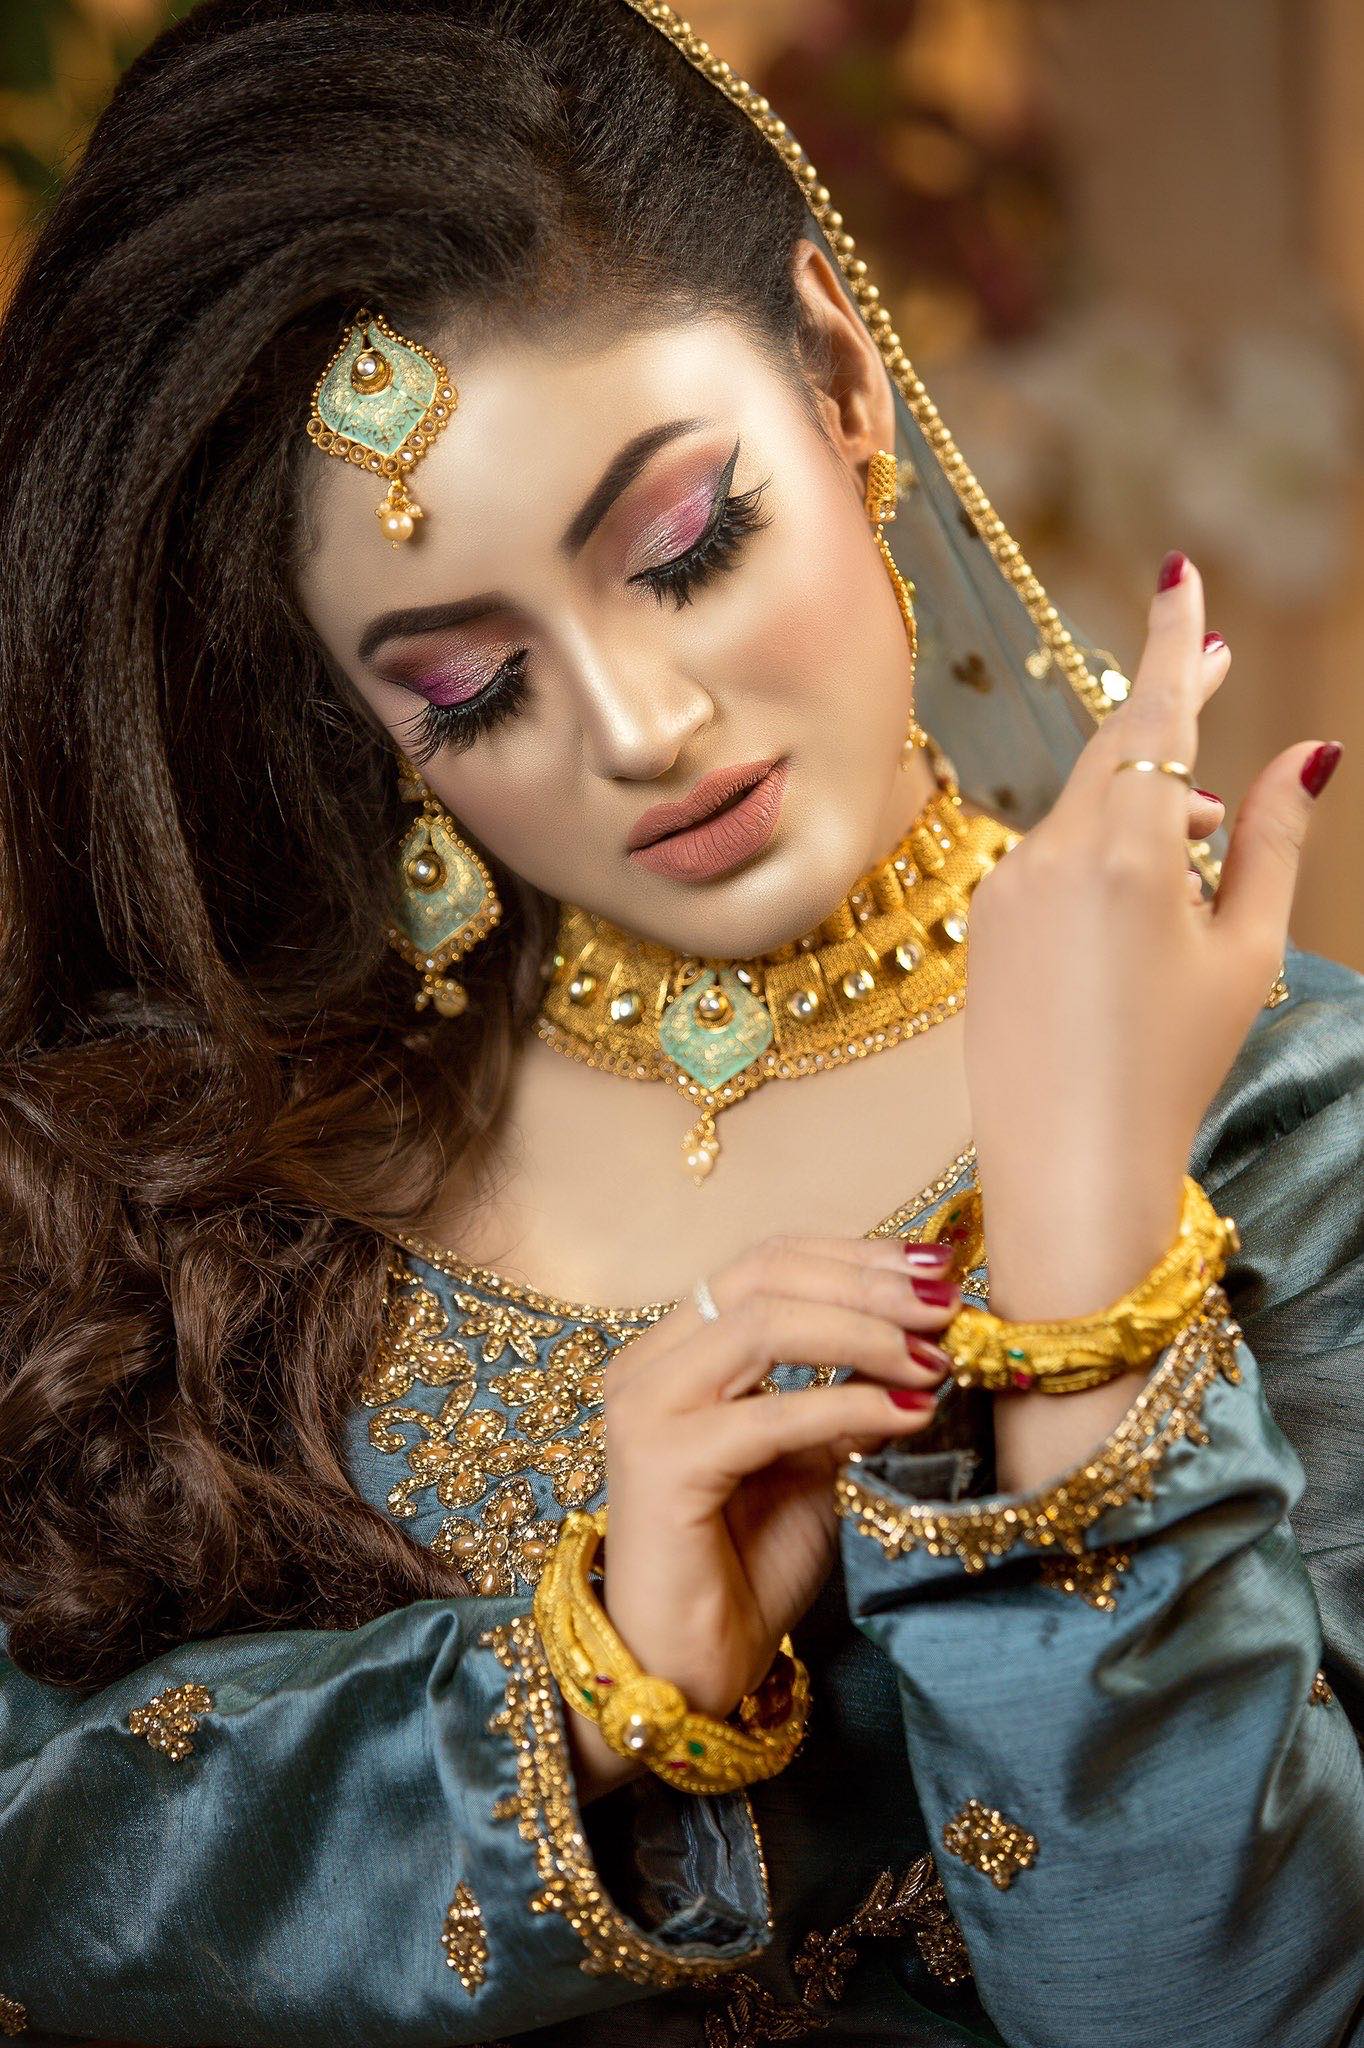 Bangladeshi Hot Model and Actress Mou Khan Biography, Wiki, Age, Height, Boyfriend & More